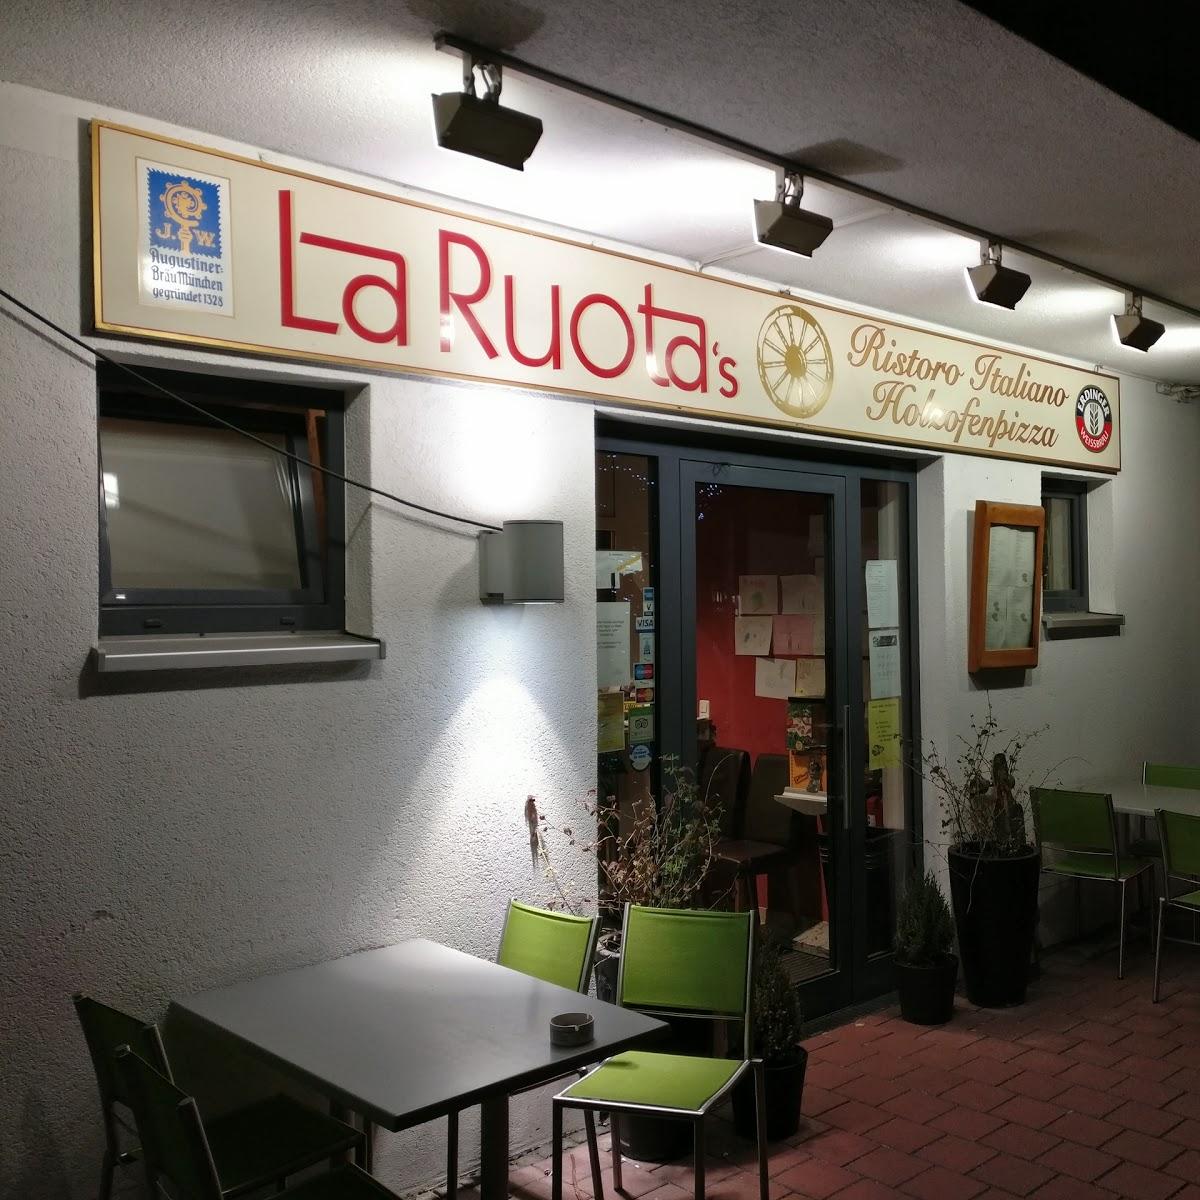 Restaurant "Restaurant La Ruotas Ristoro Italiano" in  Sauerlach